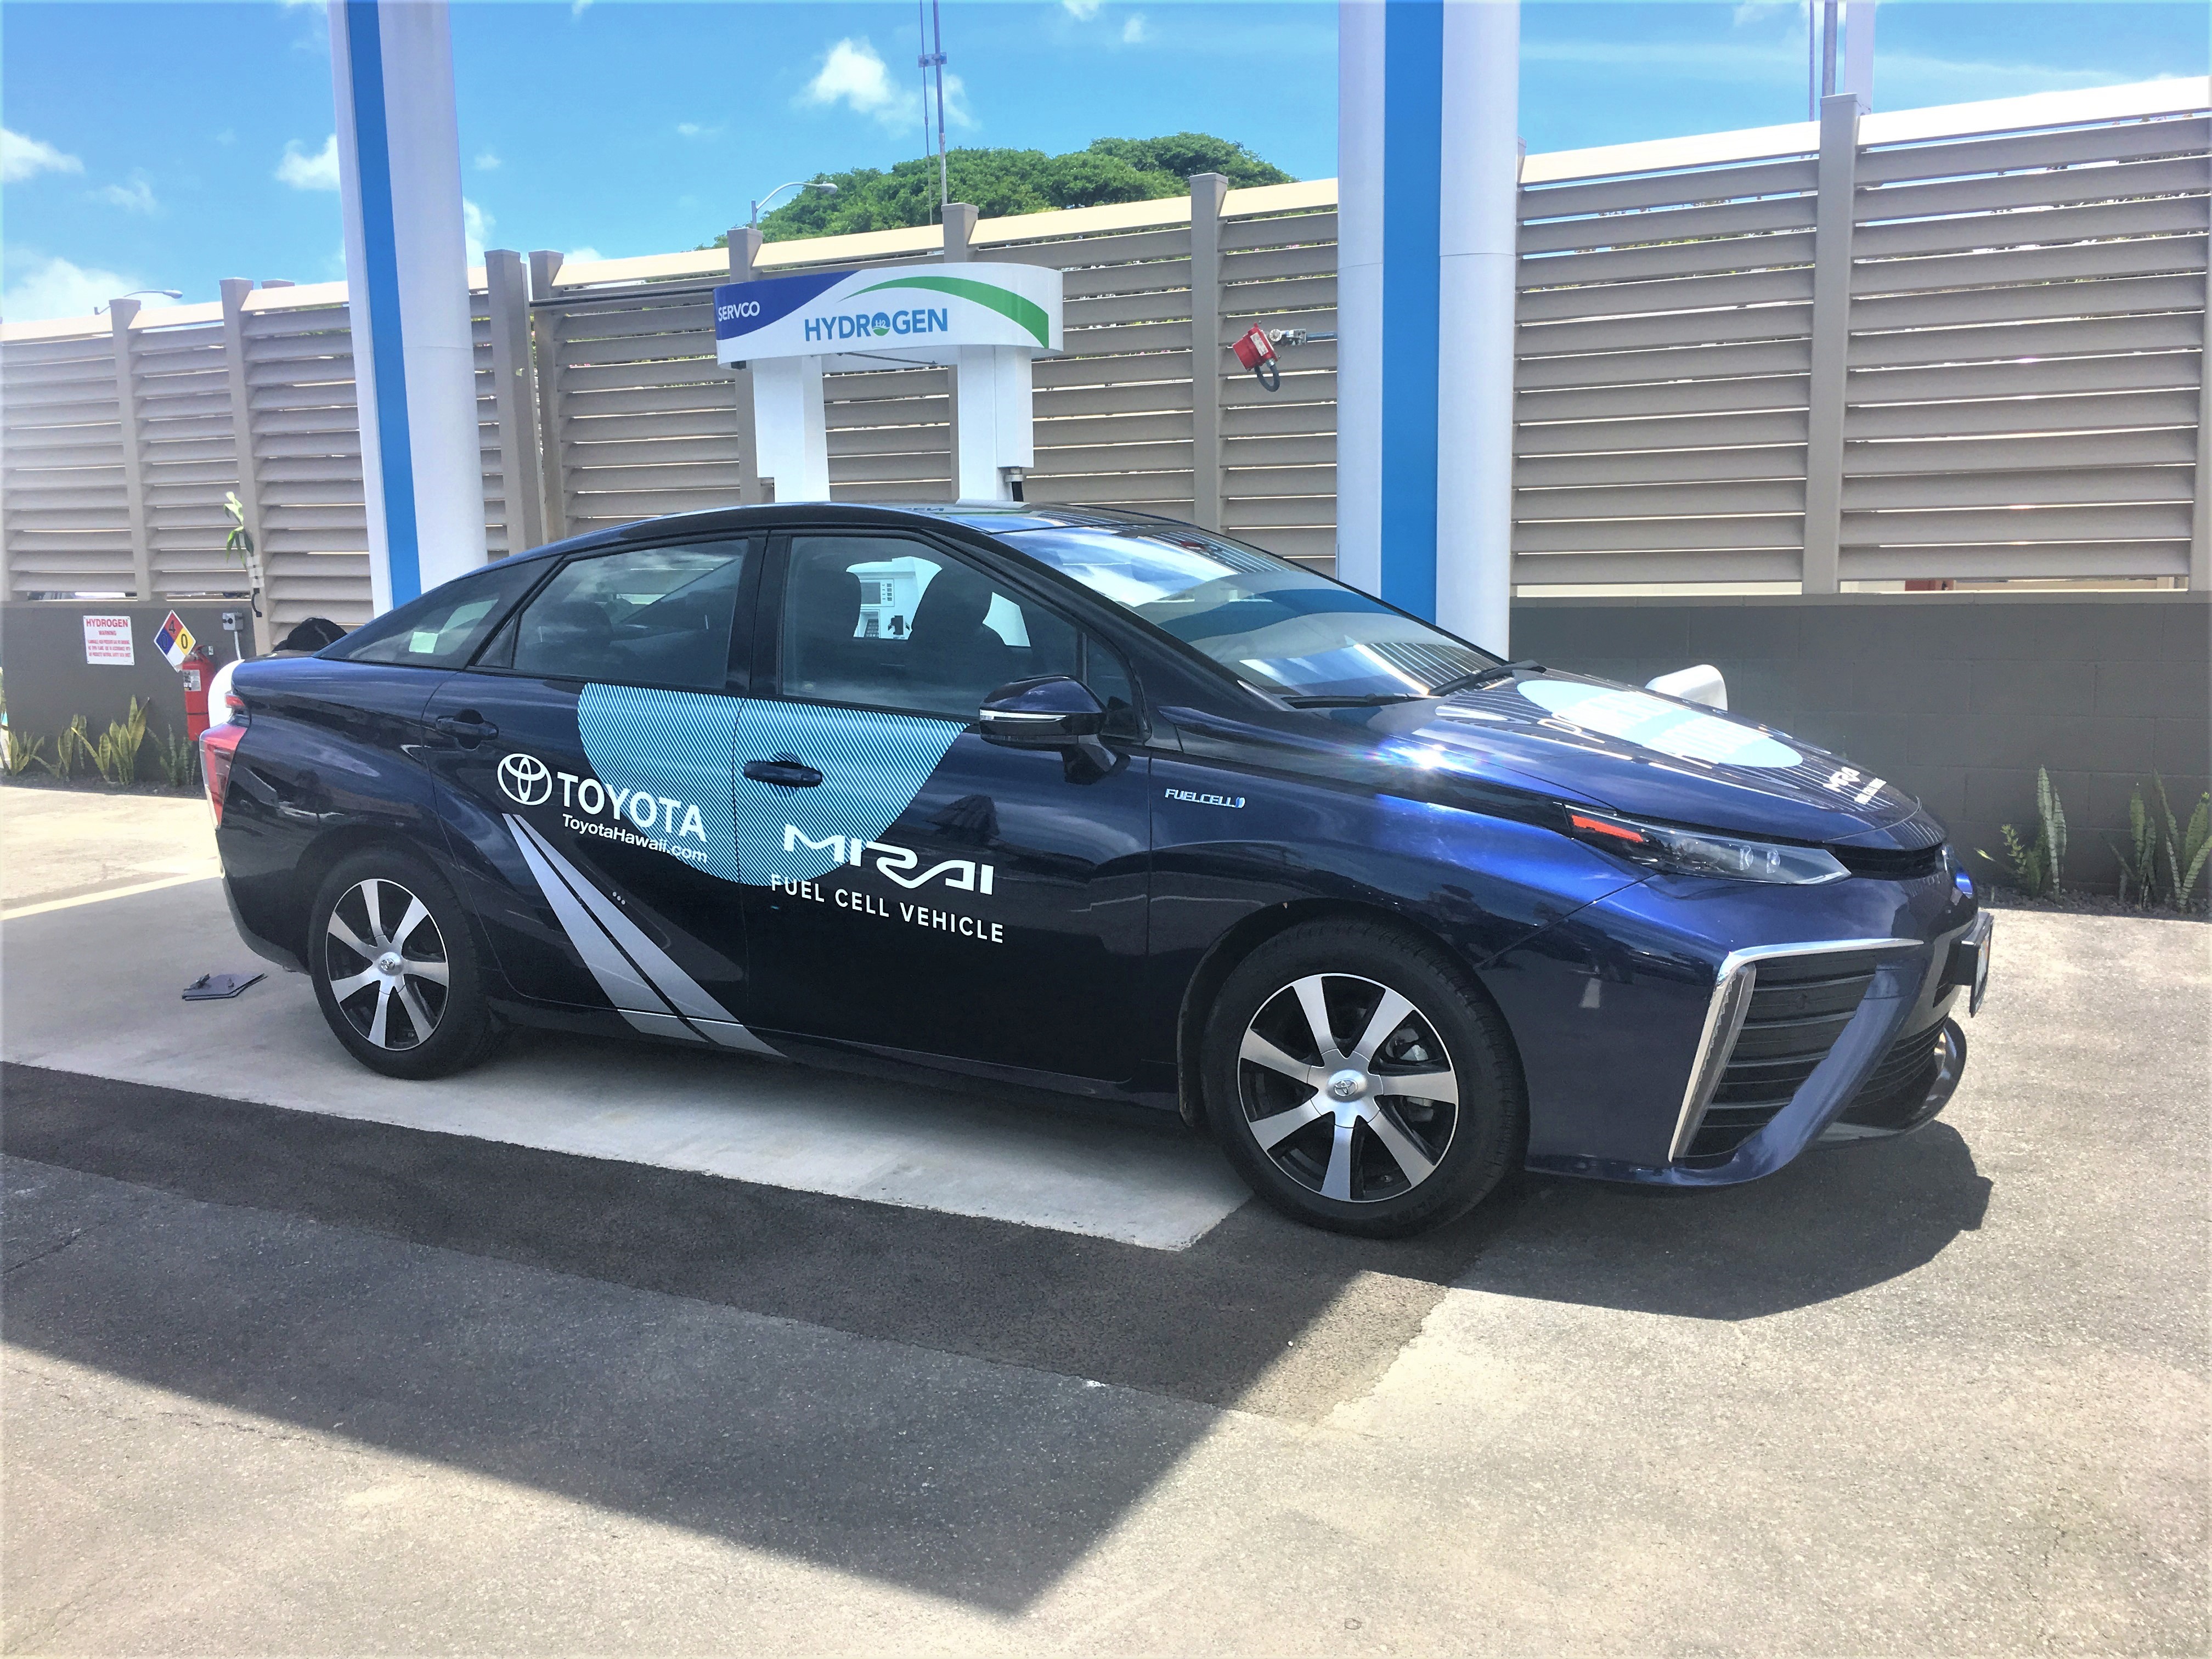 Toyota Mirai Forklifts Share Fuel Cell Technology Wardsauto